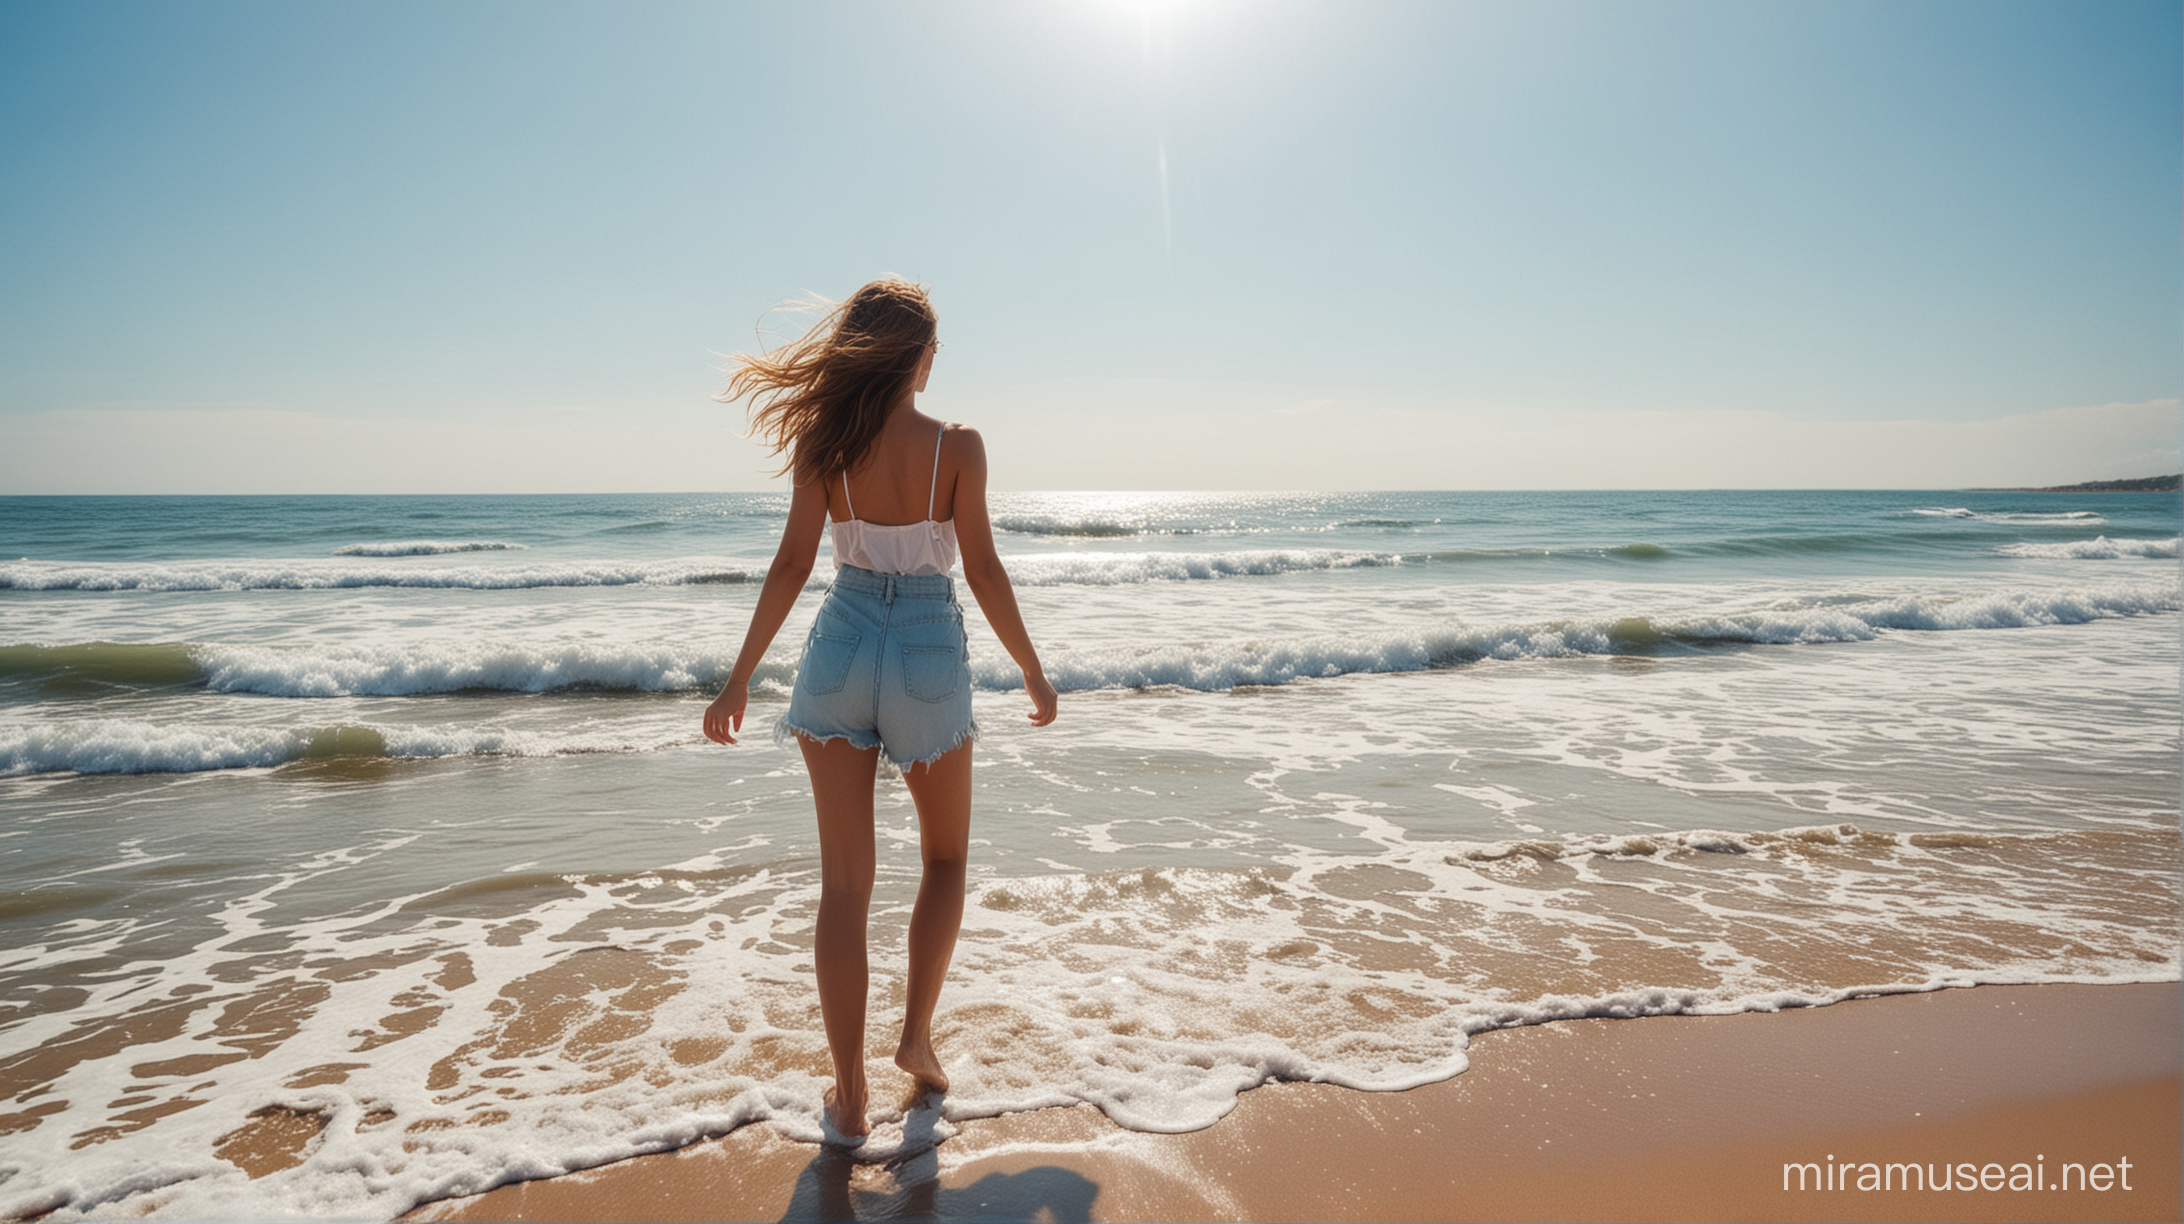 Joyful Woman Walking on Seaside Beach with Vibrant Waves